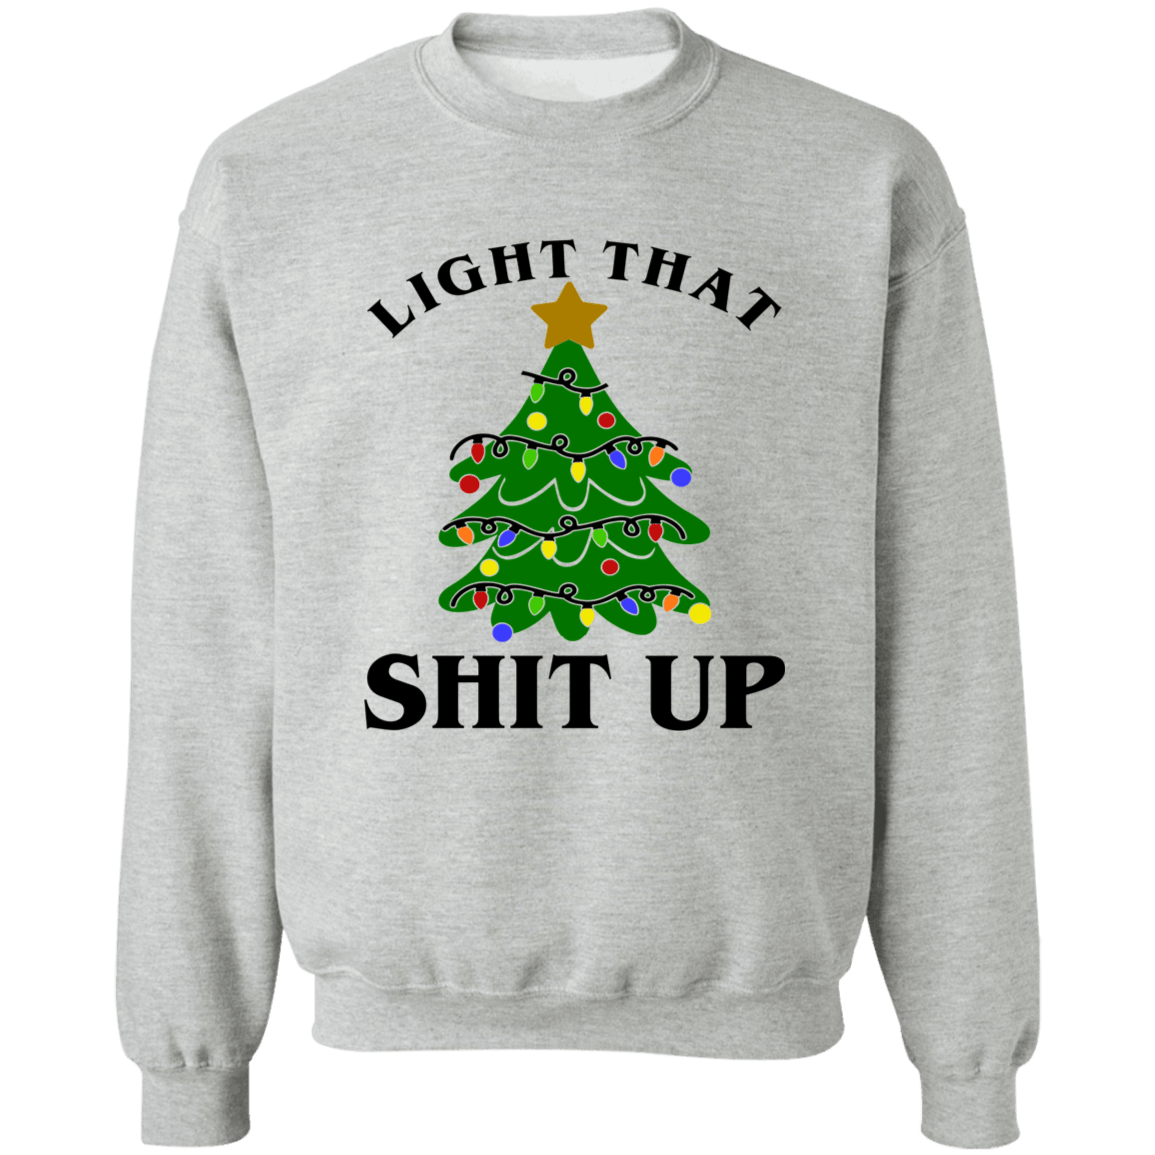 Light that $hit Up Crewneck Pullover Sweatshirt